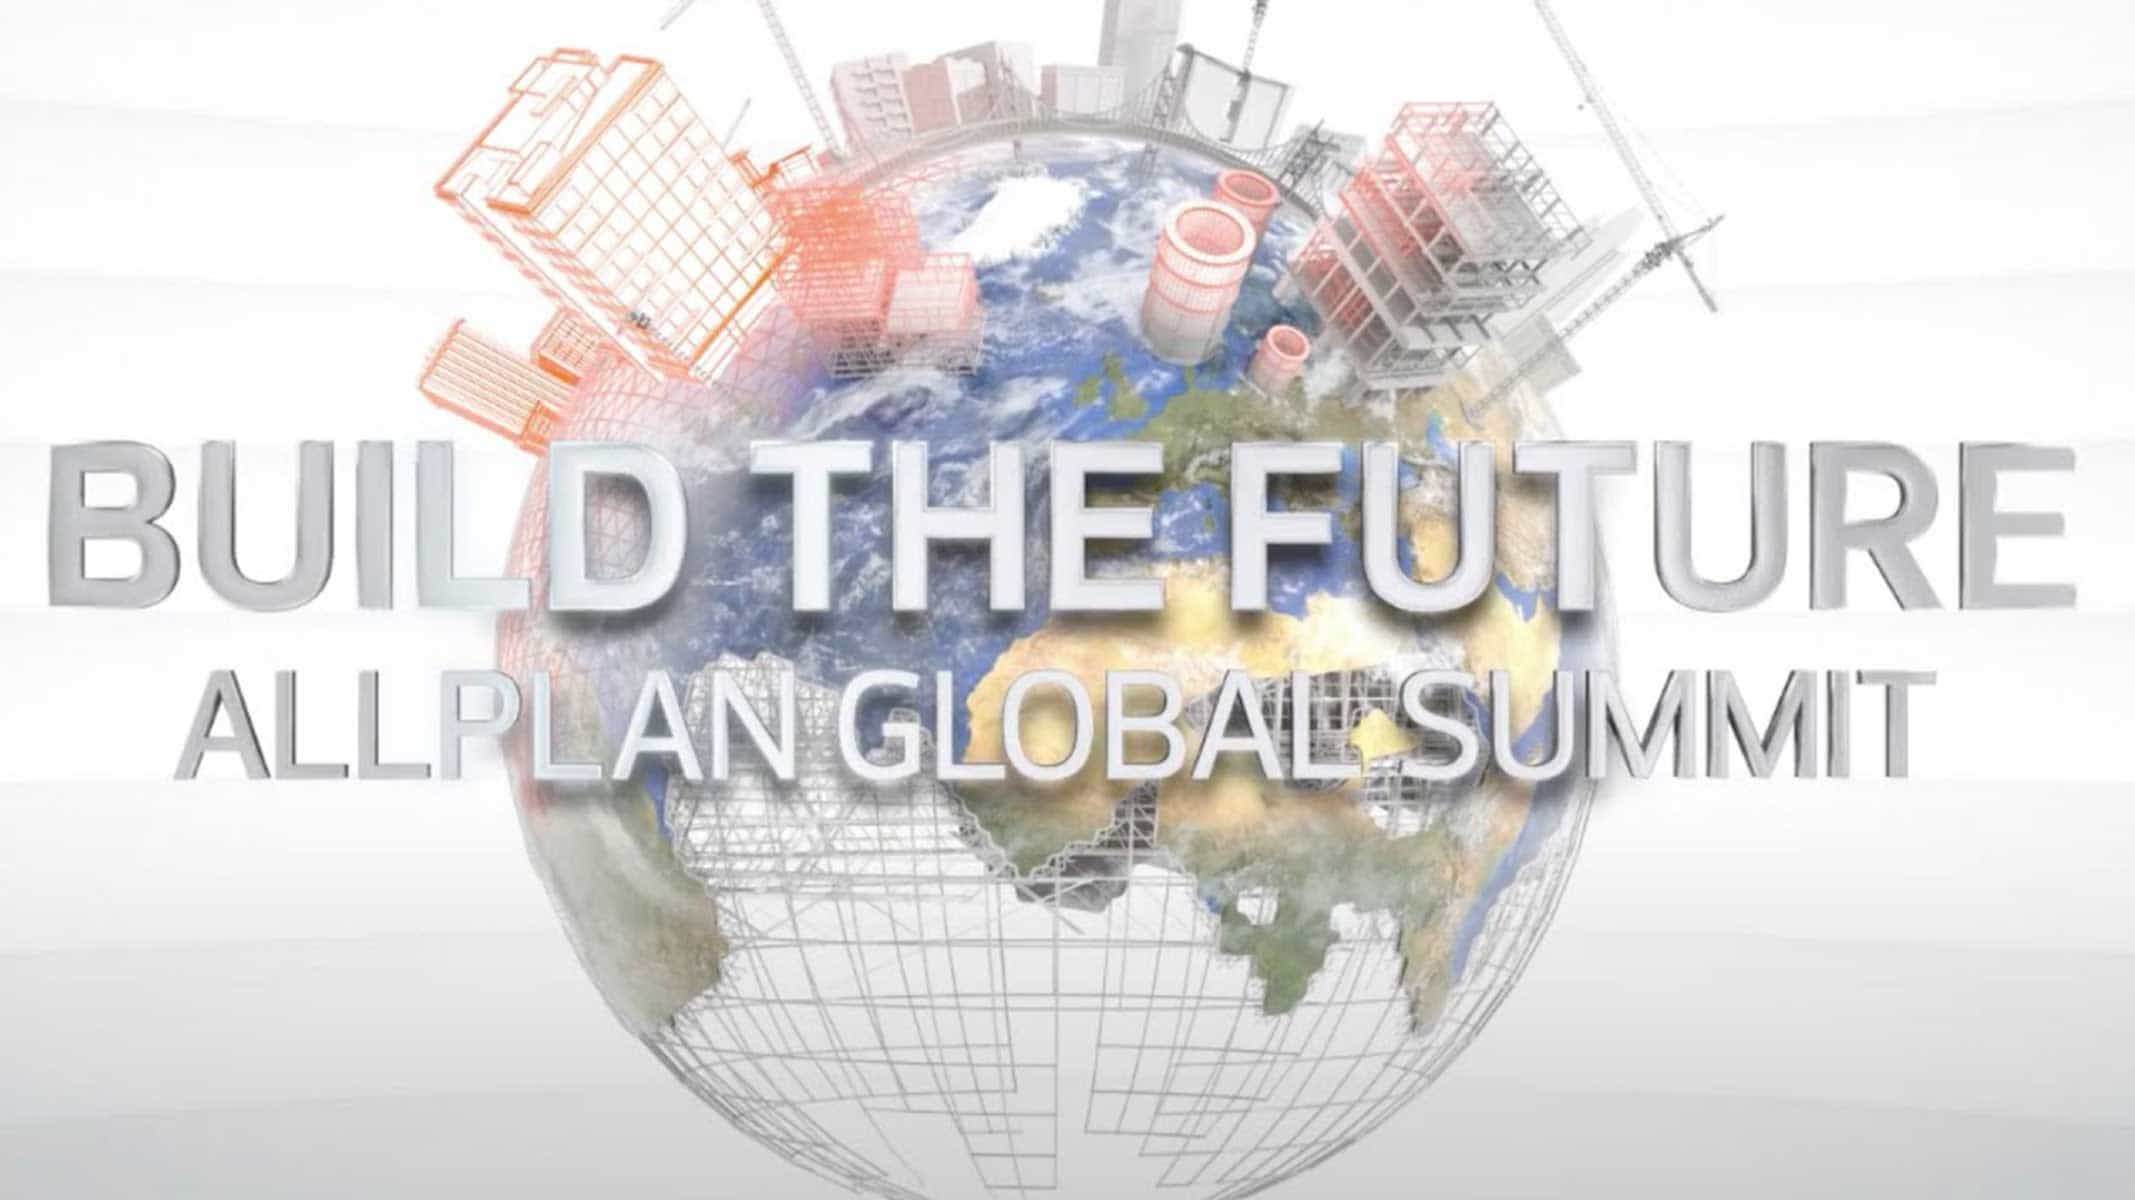 allplan global summit thumbnail 2135x1200